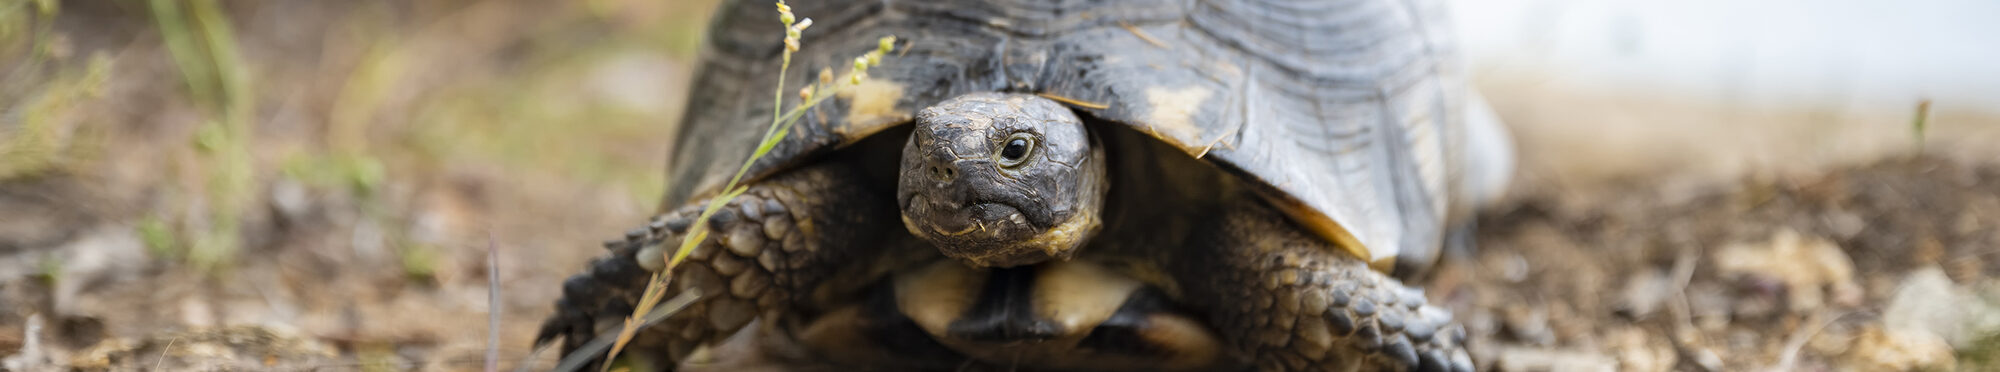 Motivbild Schildkröte [Foto: ©Travel Wild - stock.adobe.com]